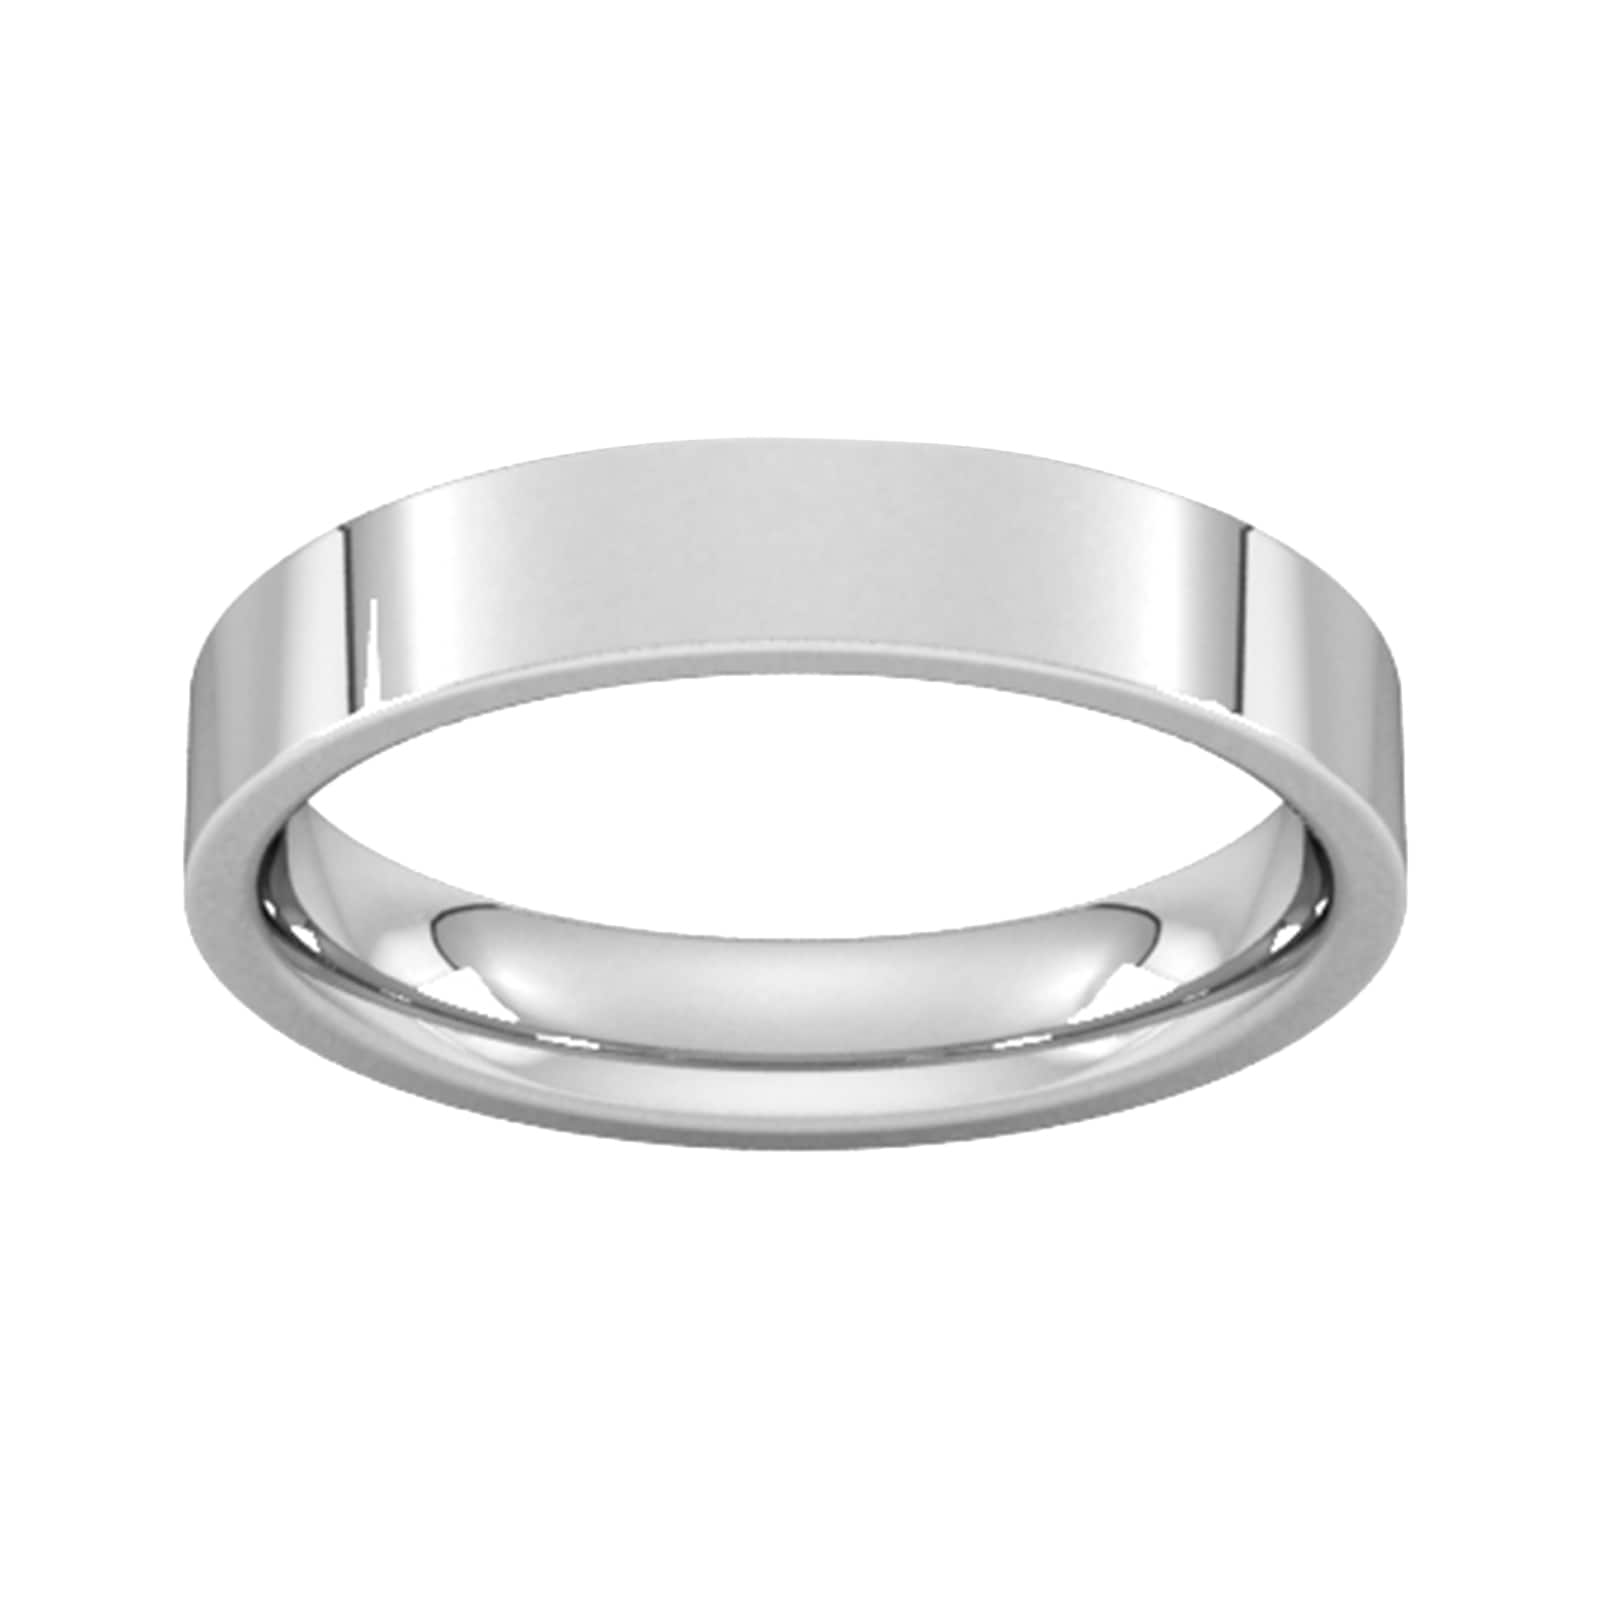 4mm Flat Court Heavy Wedding Ring In 950 Palladium - Ring Size M